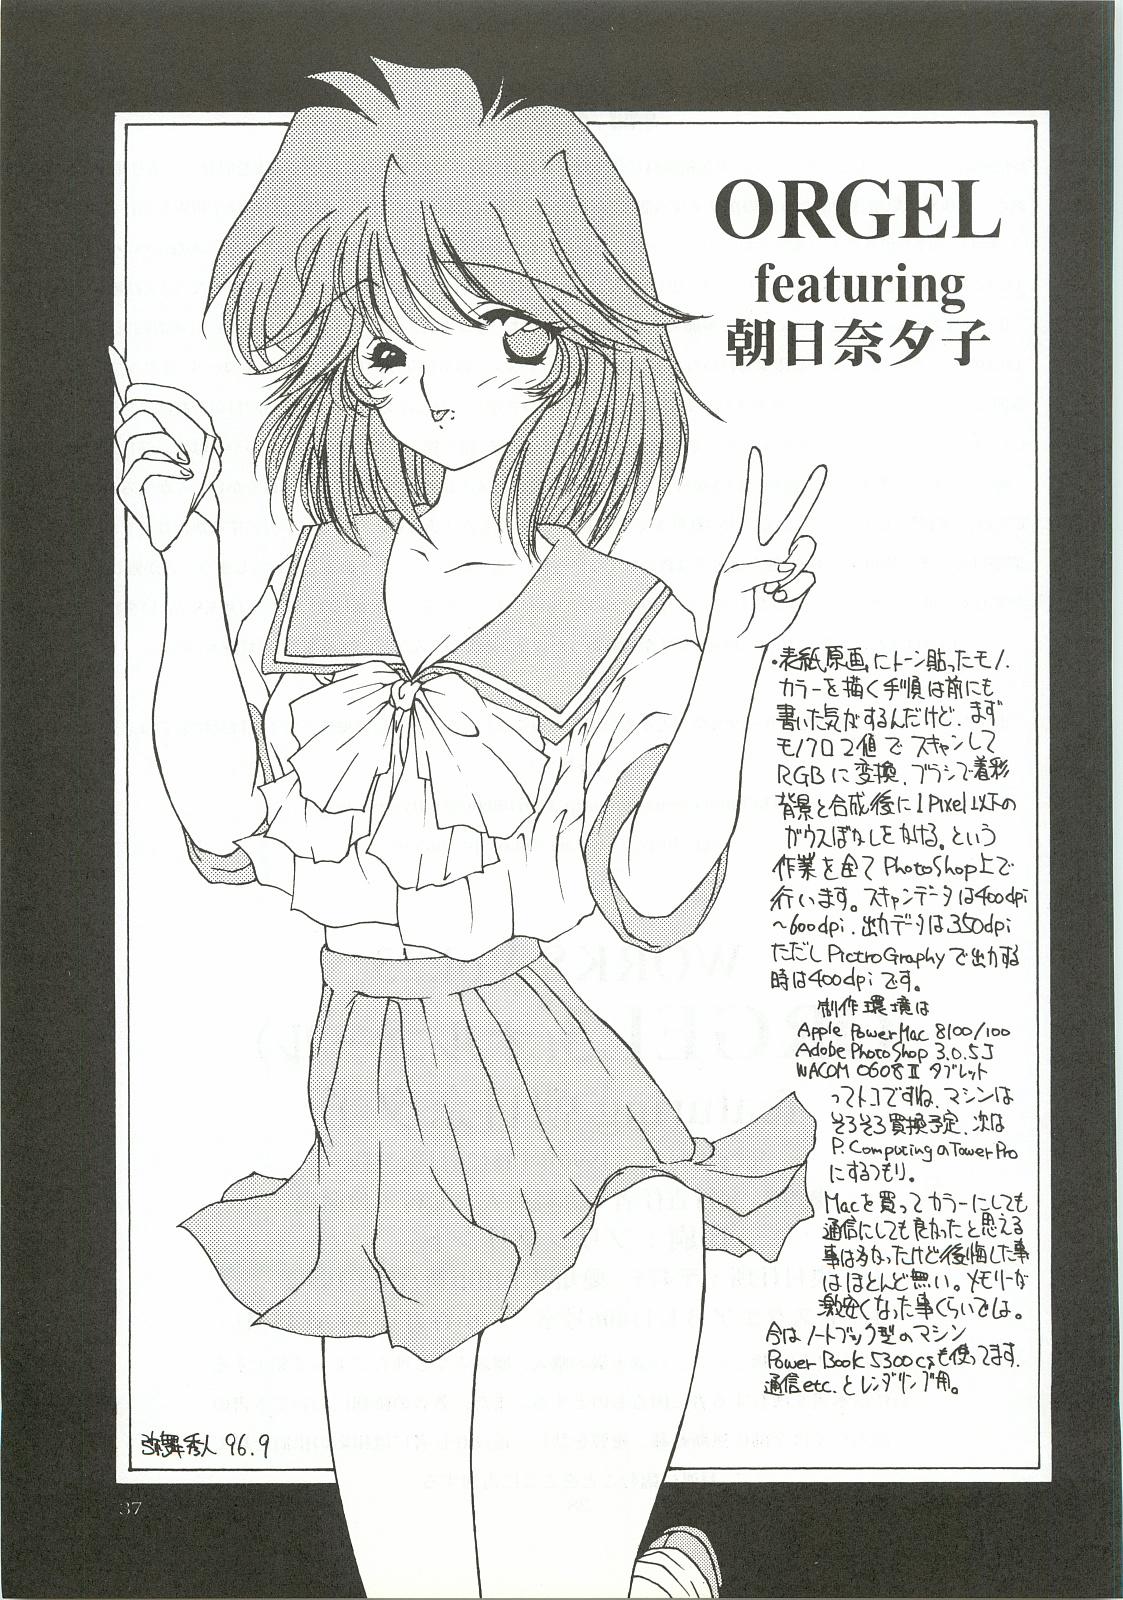 ORGEL 3 featuring Asahina Yuuko 35